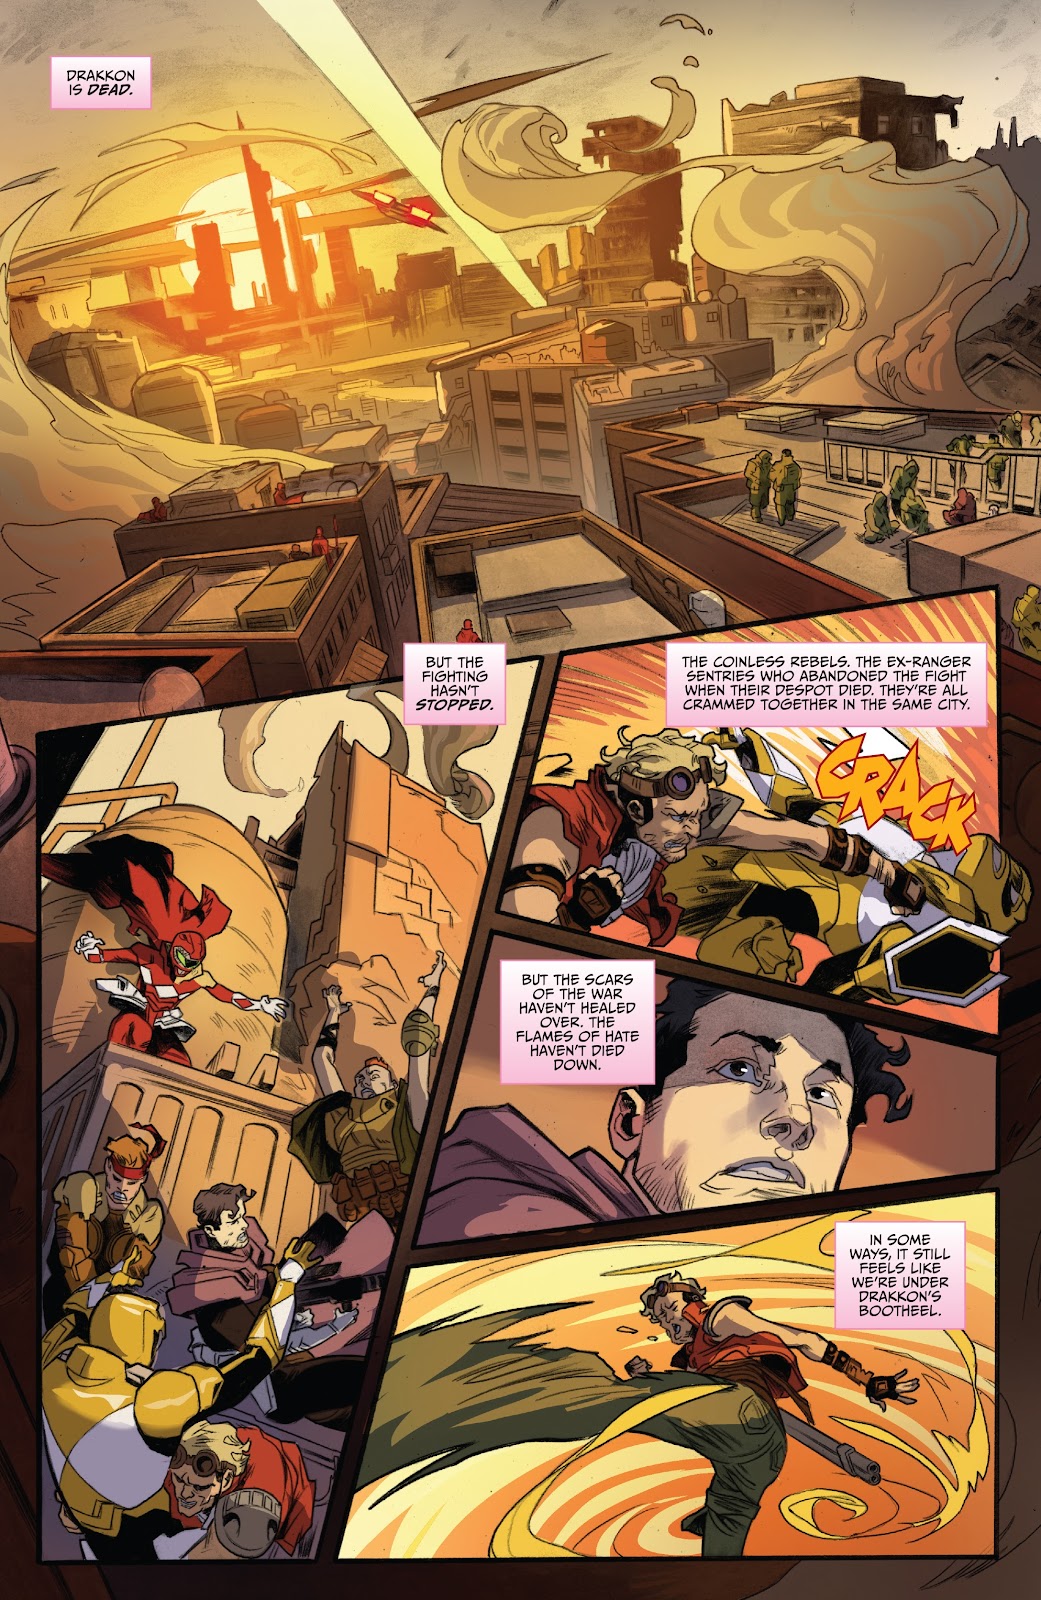 Power Rangers: Drakkon New Dawn issue 1 - Page 3